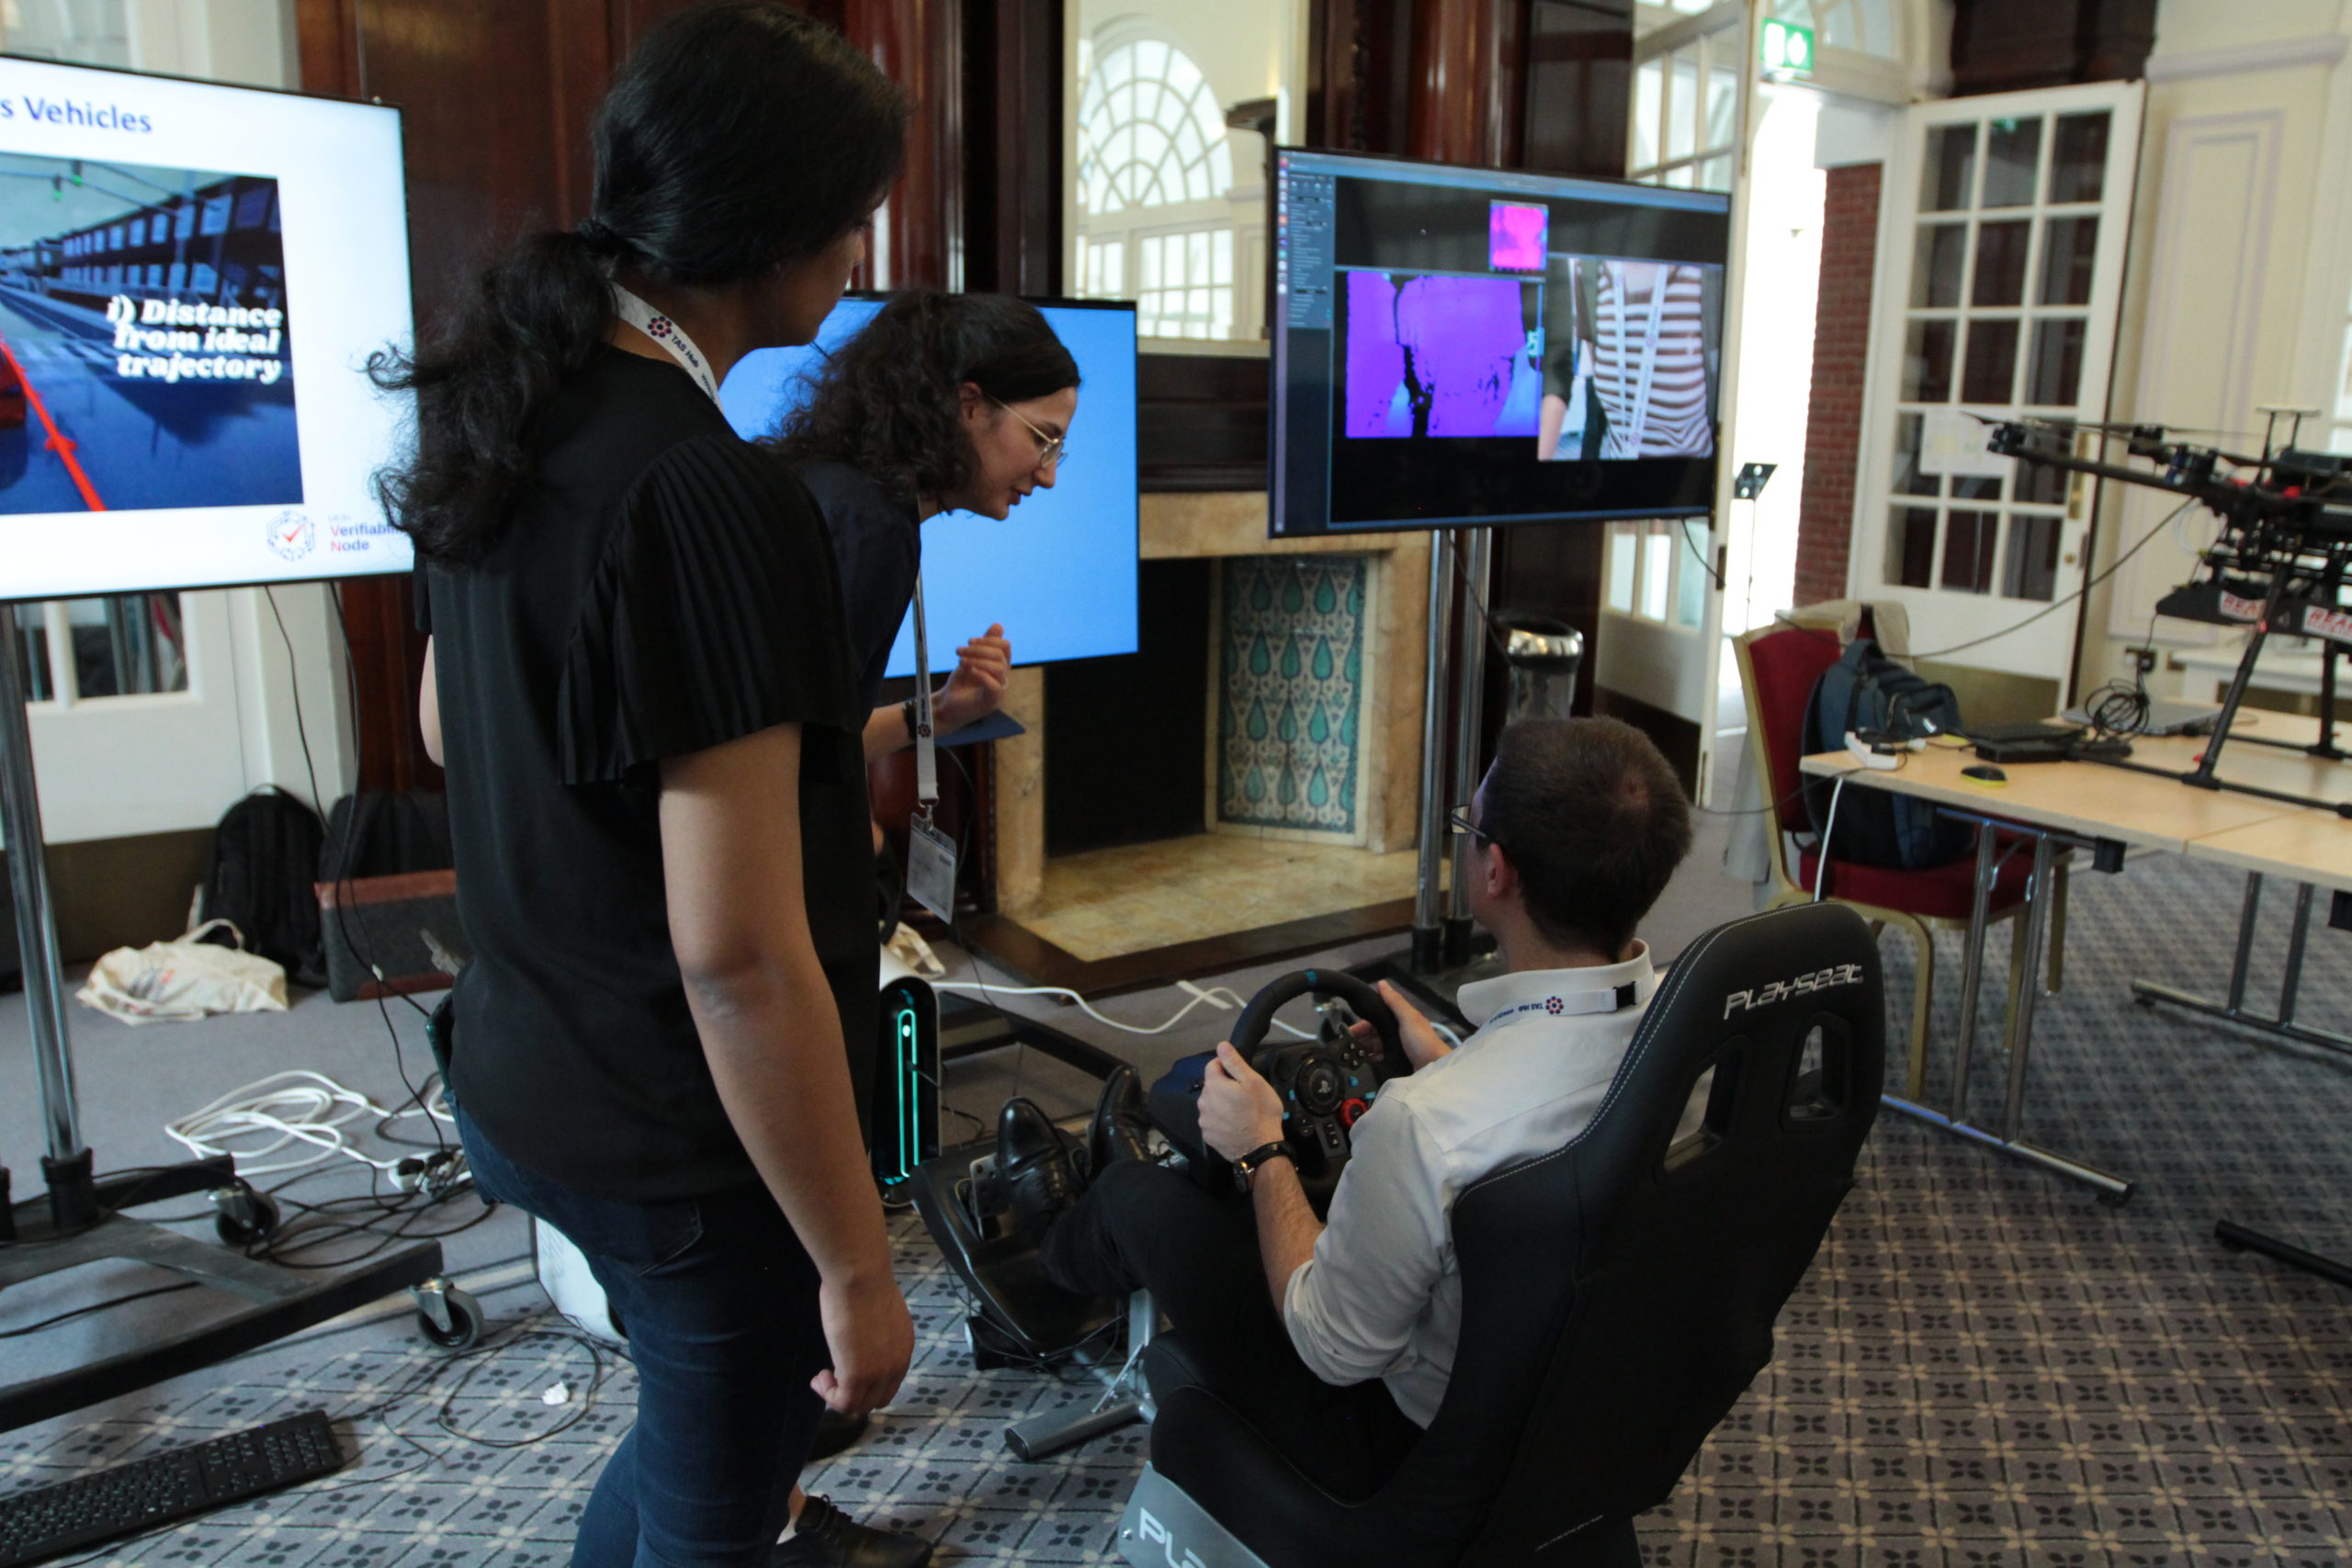 A delegate using the driving simulator